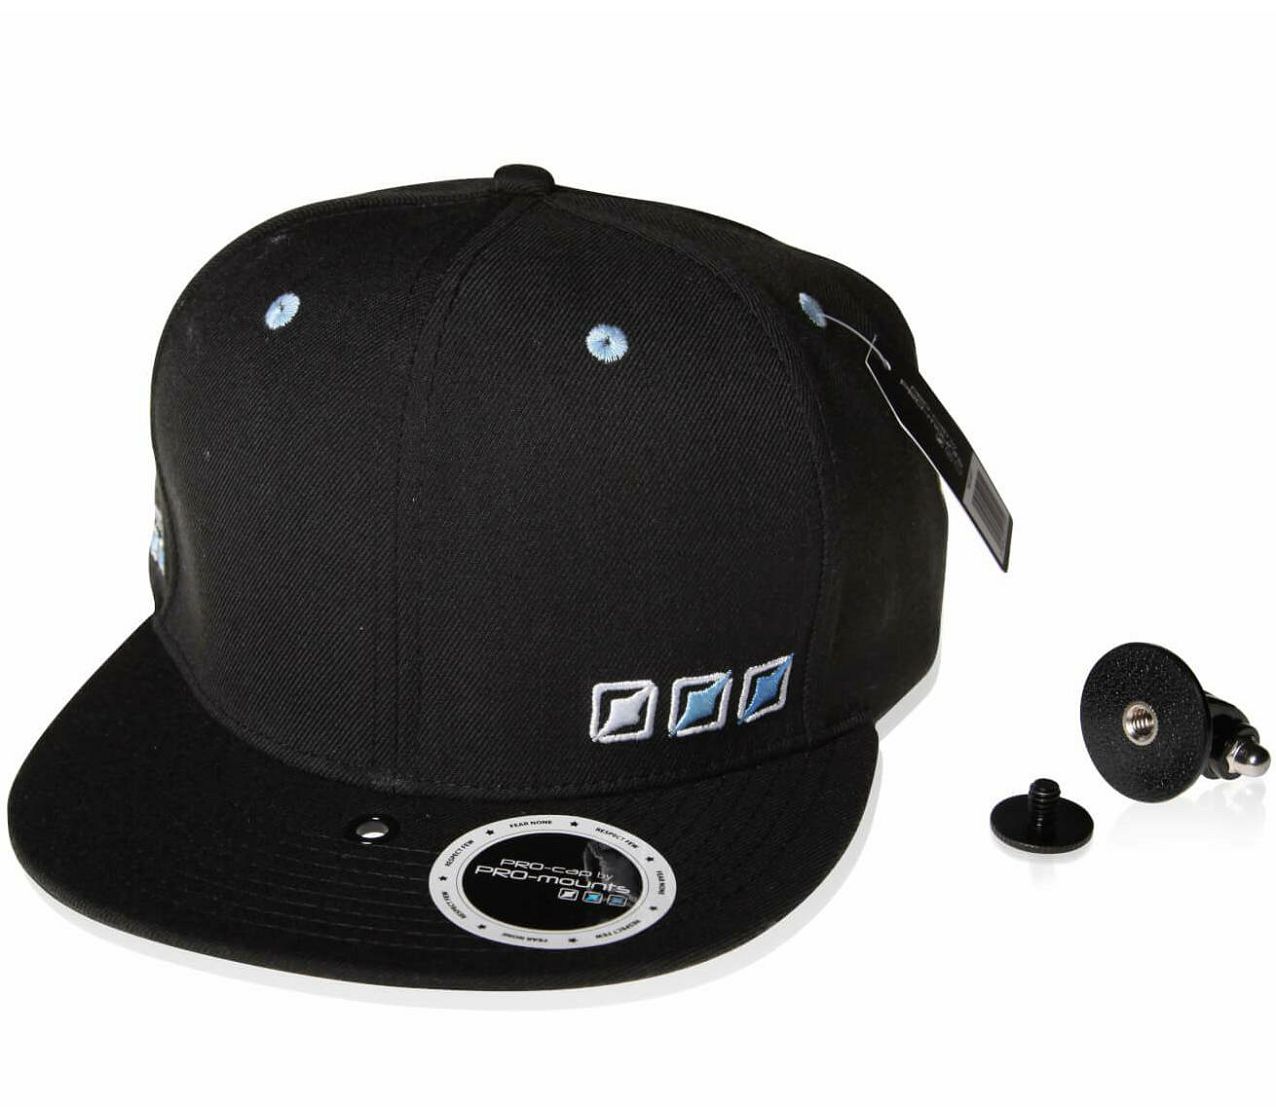 PRO-mounts PRO-cap Black kapa s integriranim nosačem za GoPro akcijske kamere